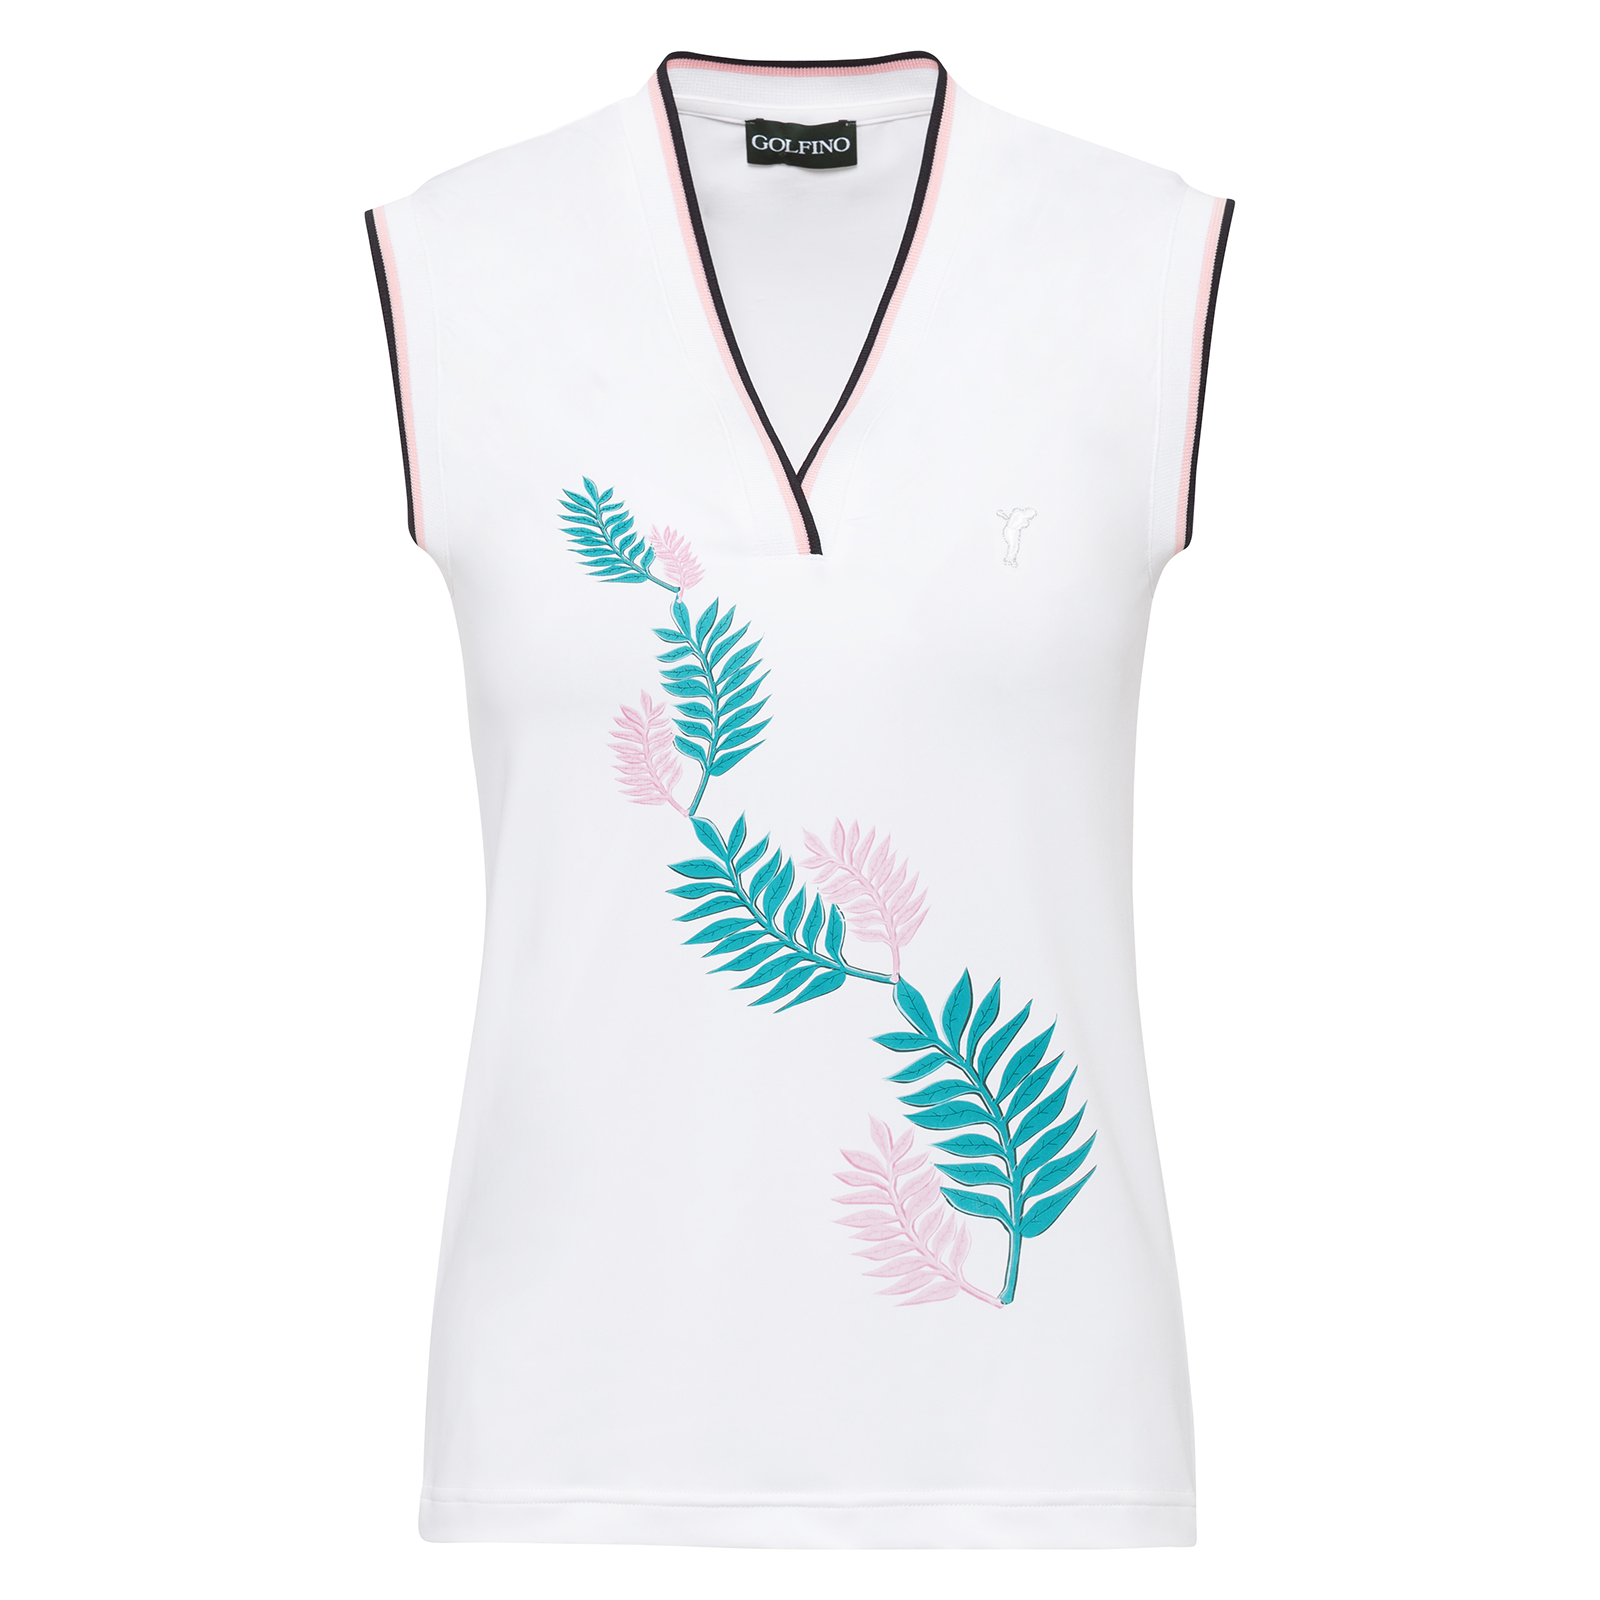 Camiseta de golf sin mangas con un toque exótico para mujer